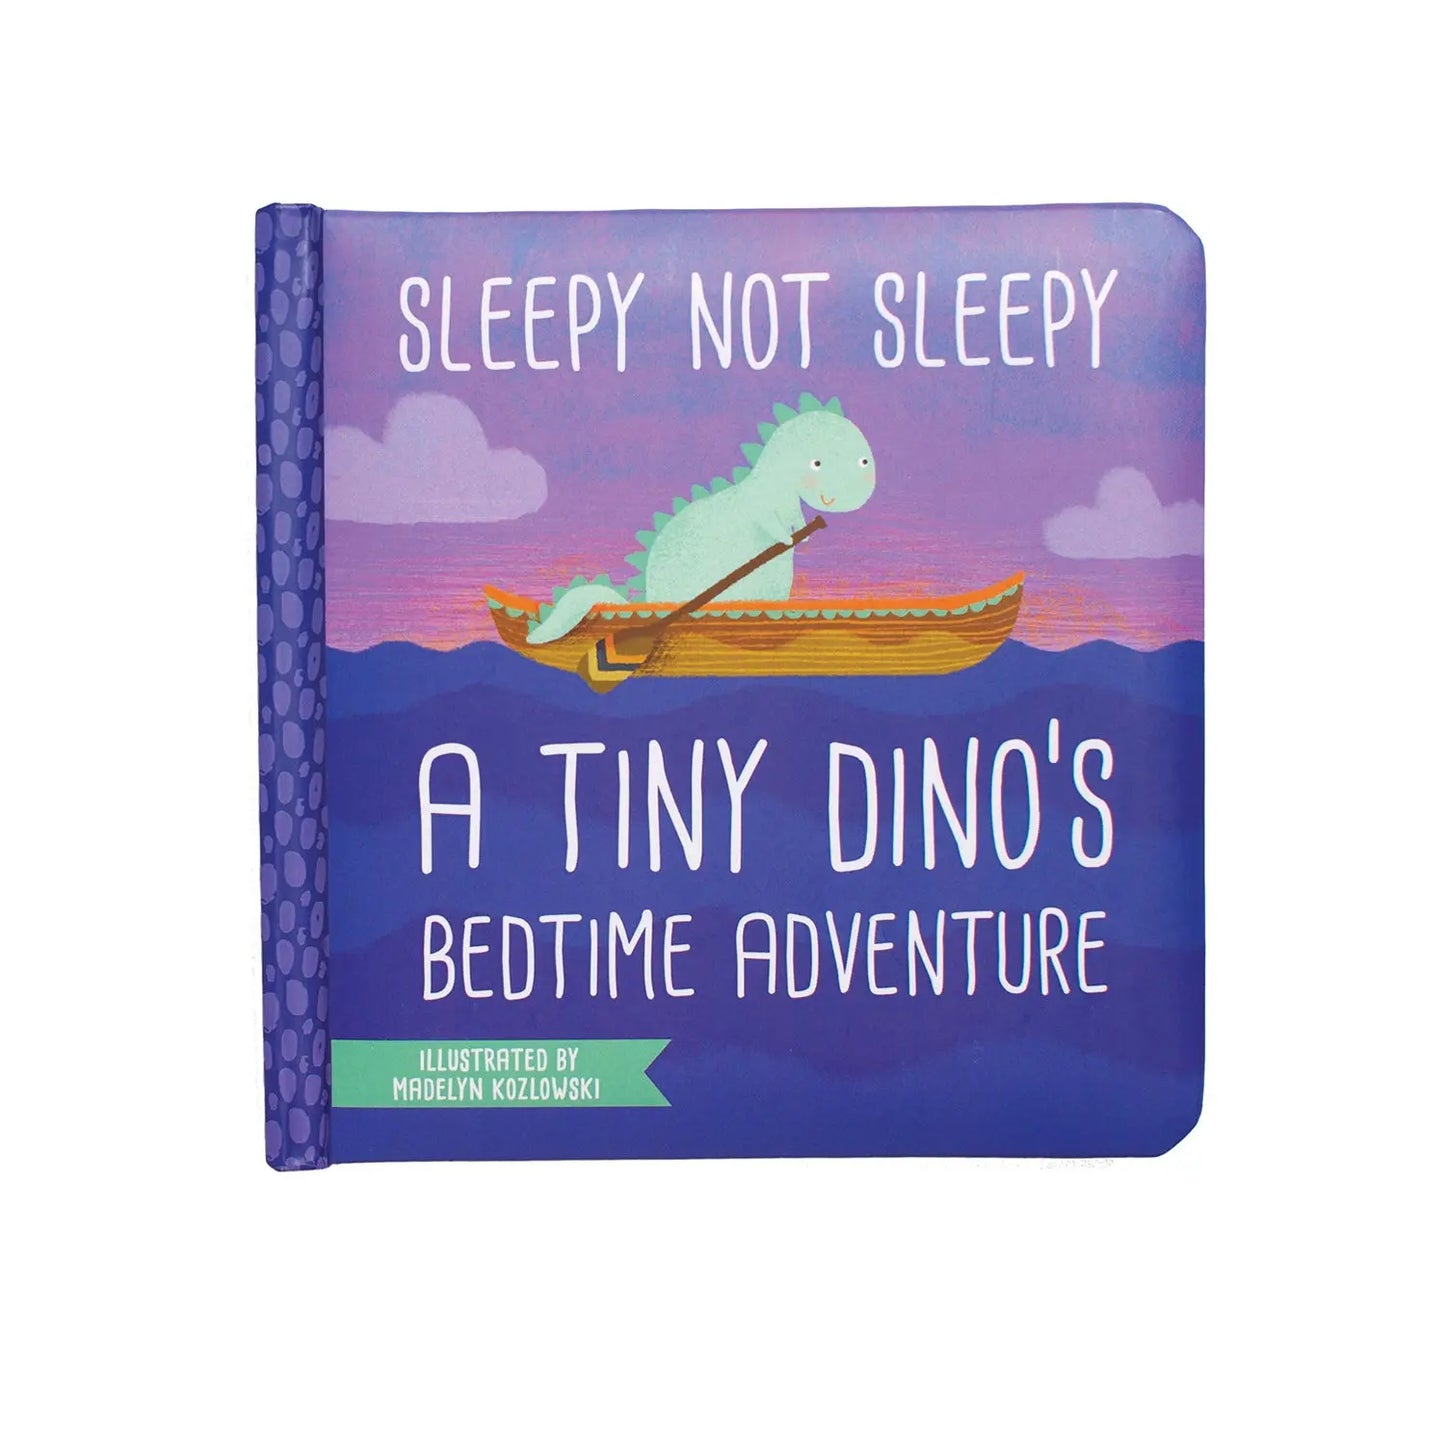 Sleepy Not Sleepy- A Tiny Dino's Bedtime Adventure Board Book